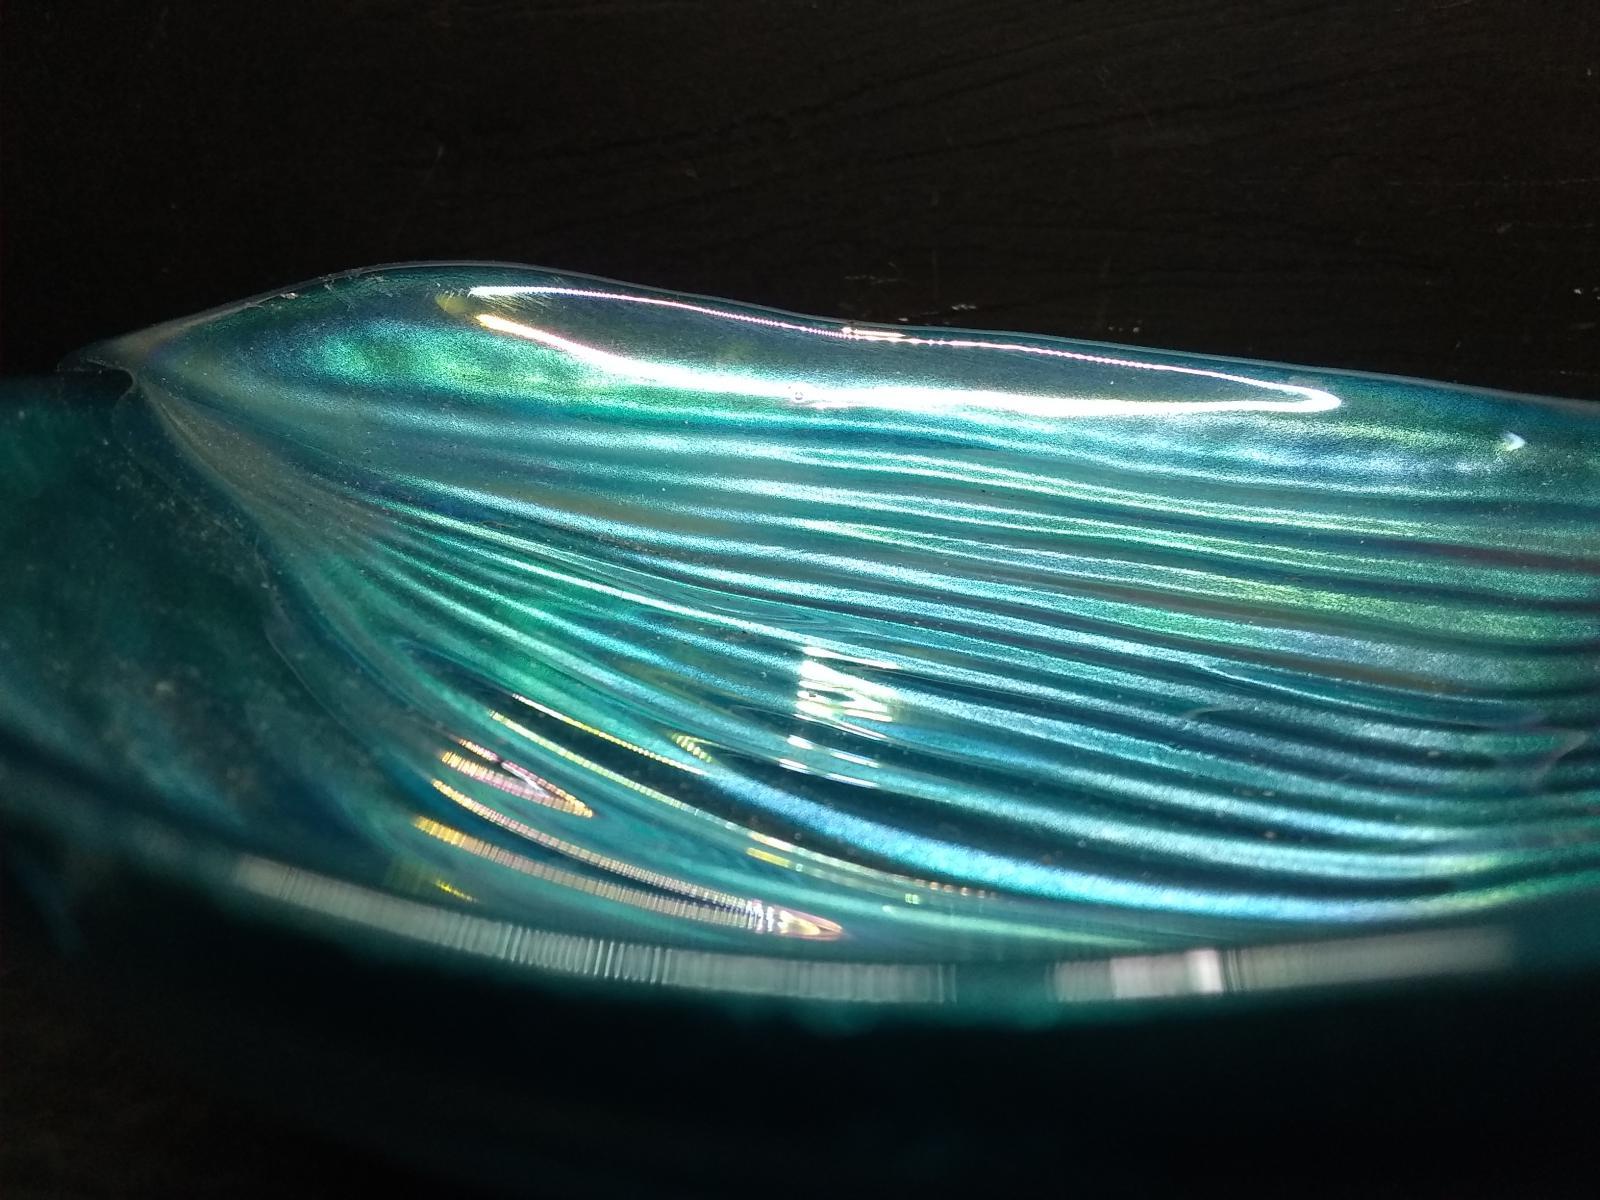 Blue Iridescent Seashell Bowl